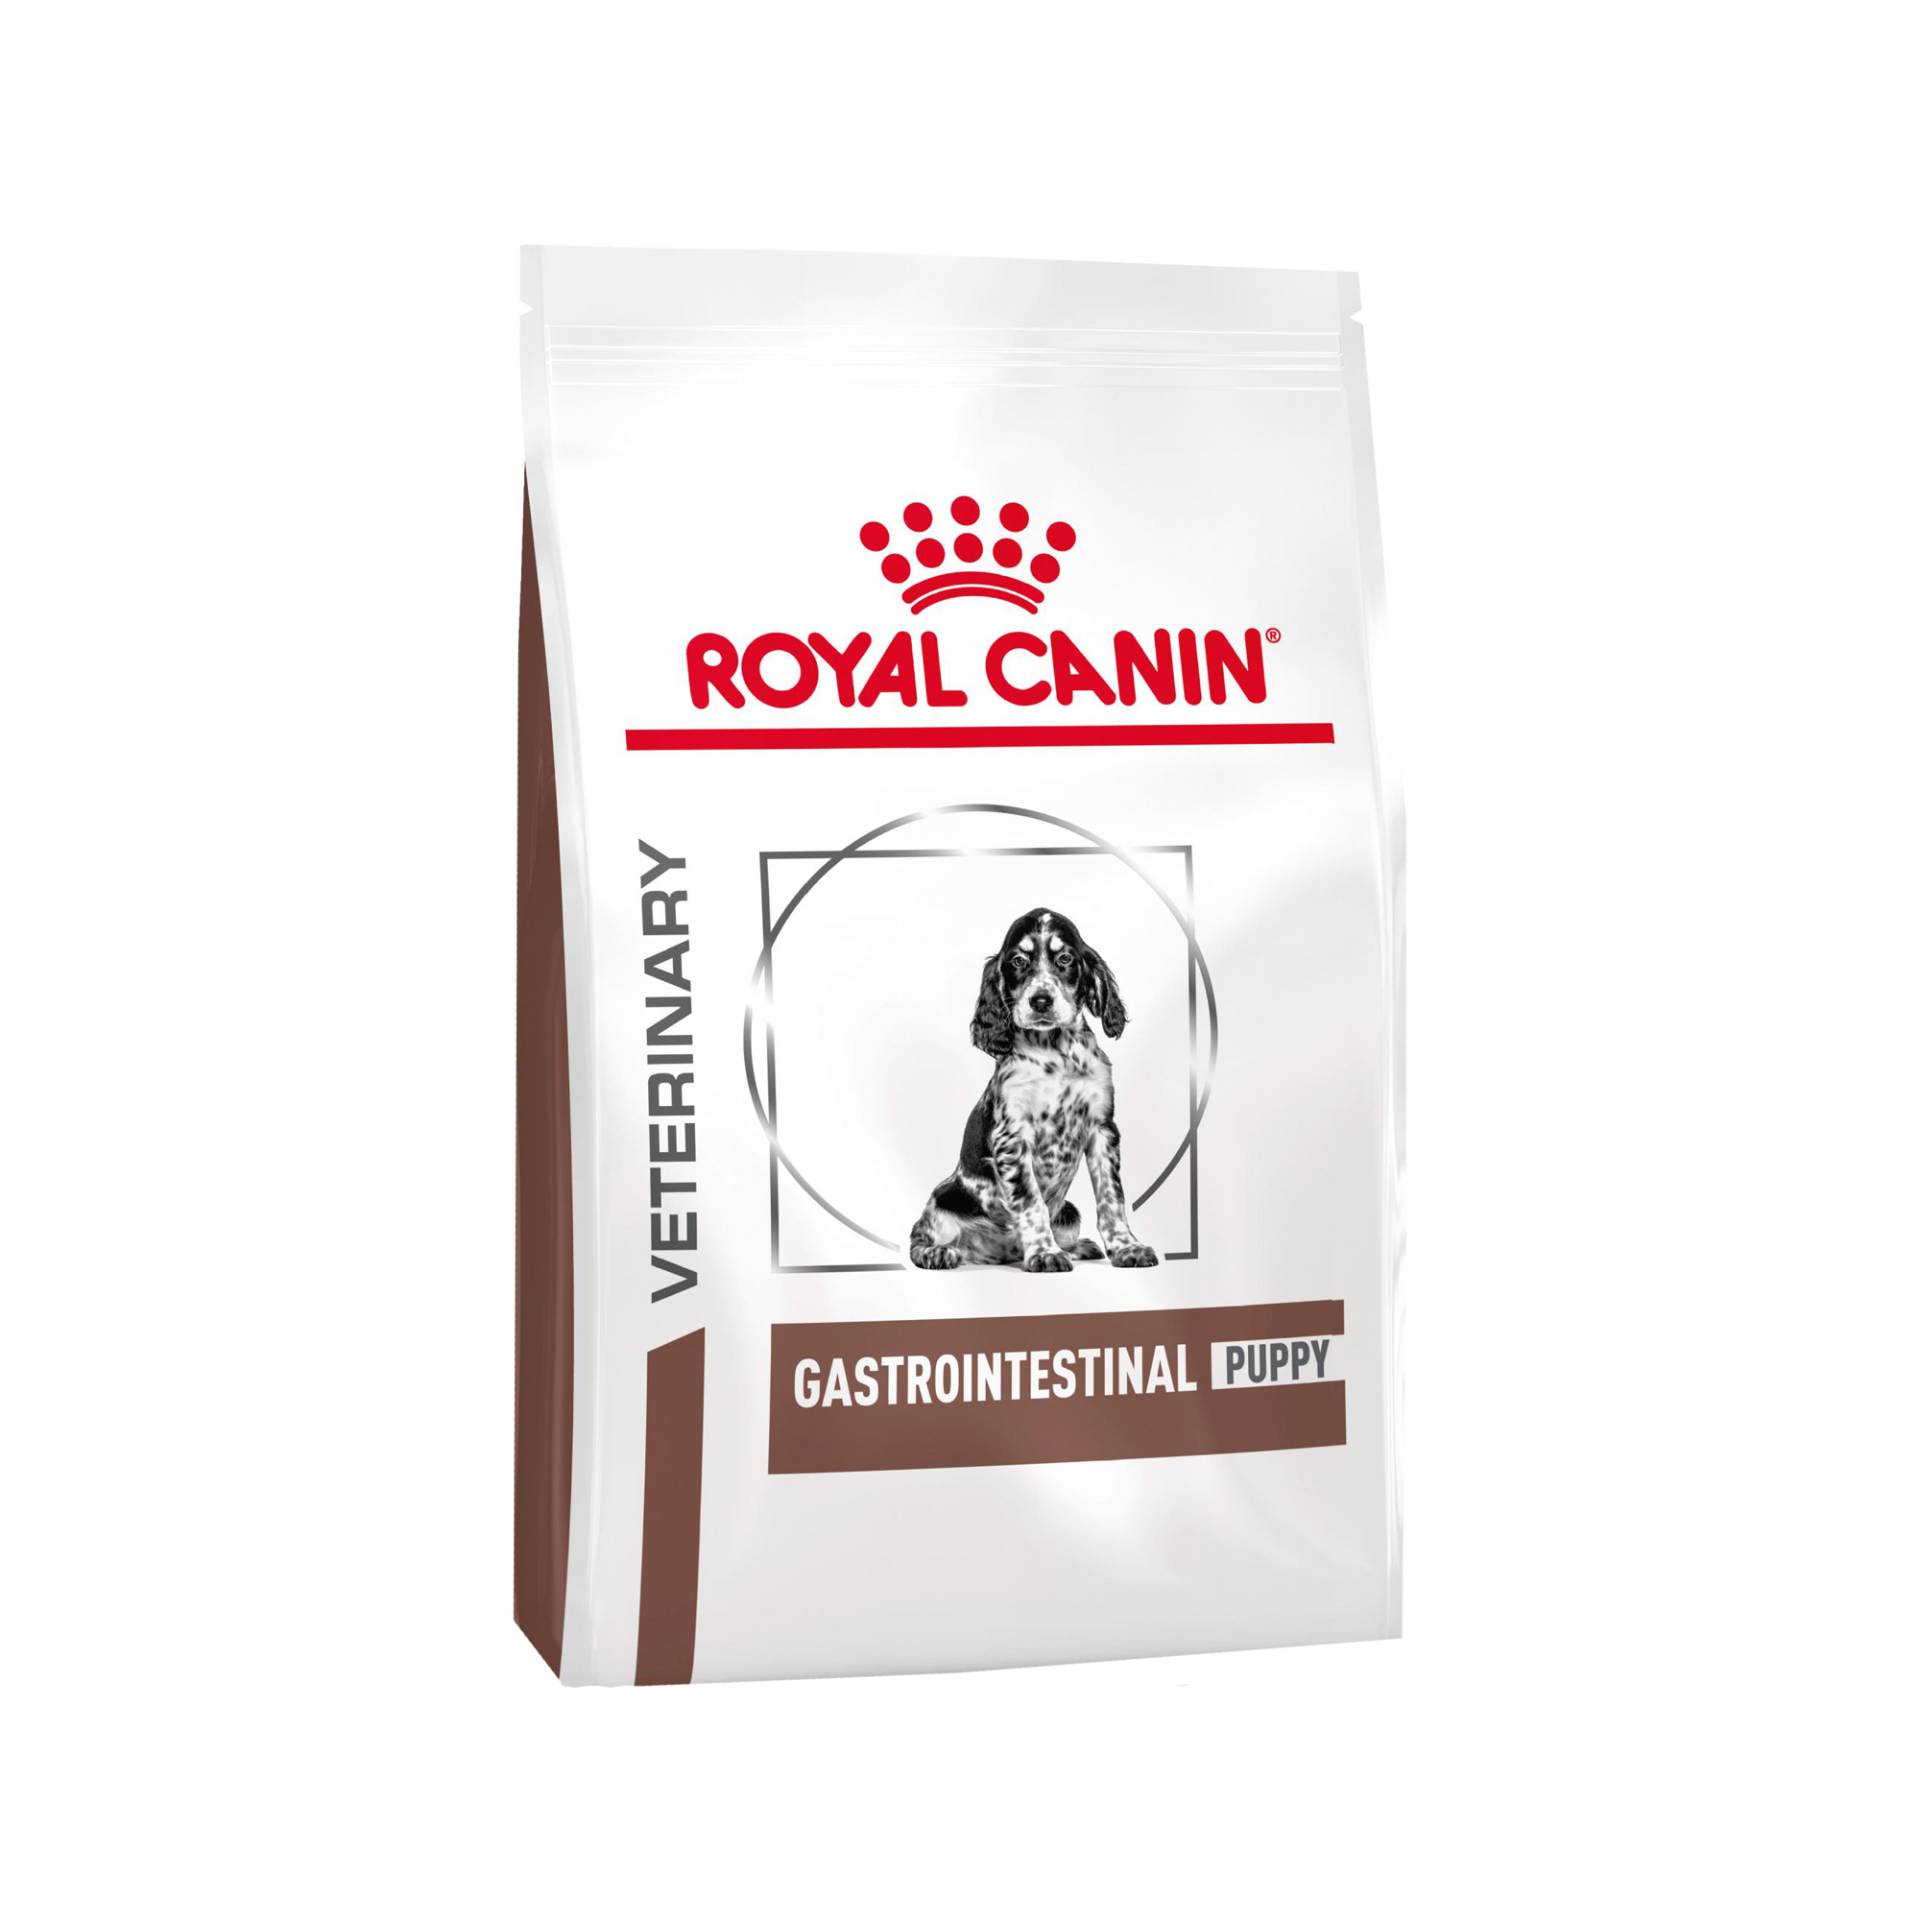 Royal Canin Gastro Intestinal Puppy Hund (GIJ 29)- 2 x 10 kg von Royal Canin